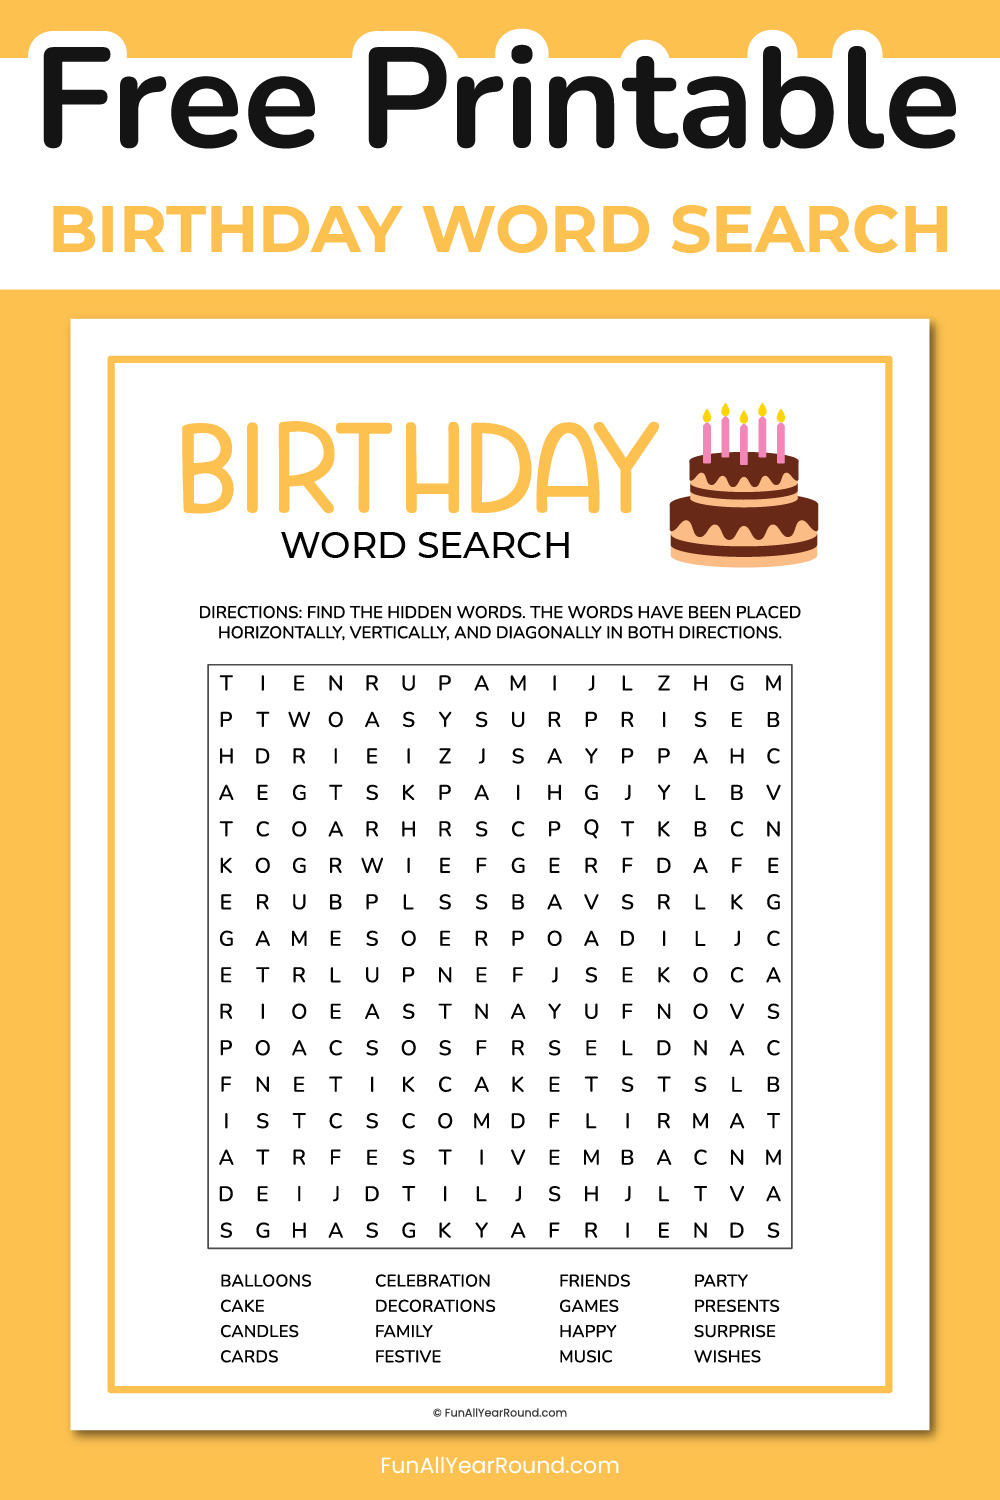 Birthday word search